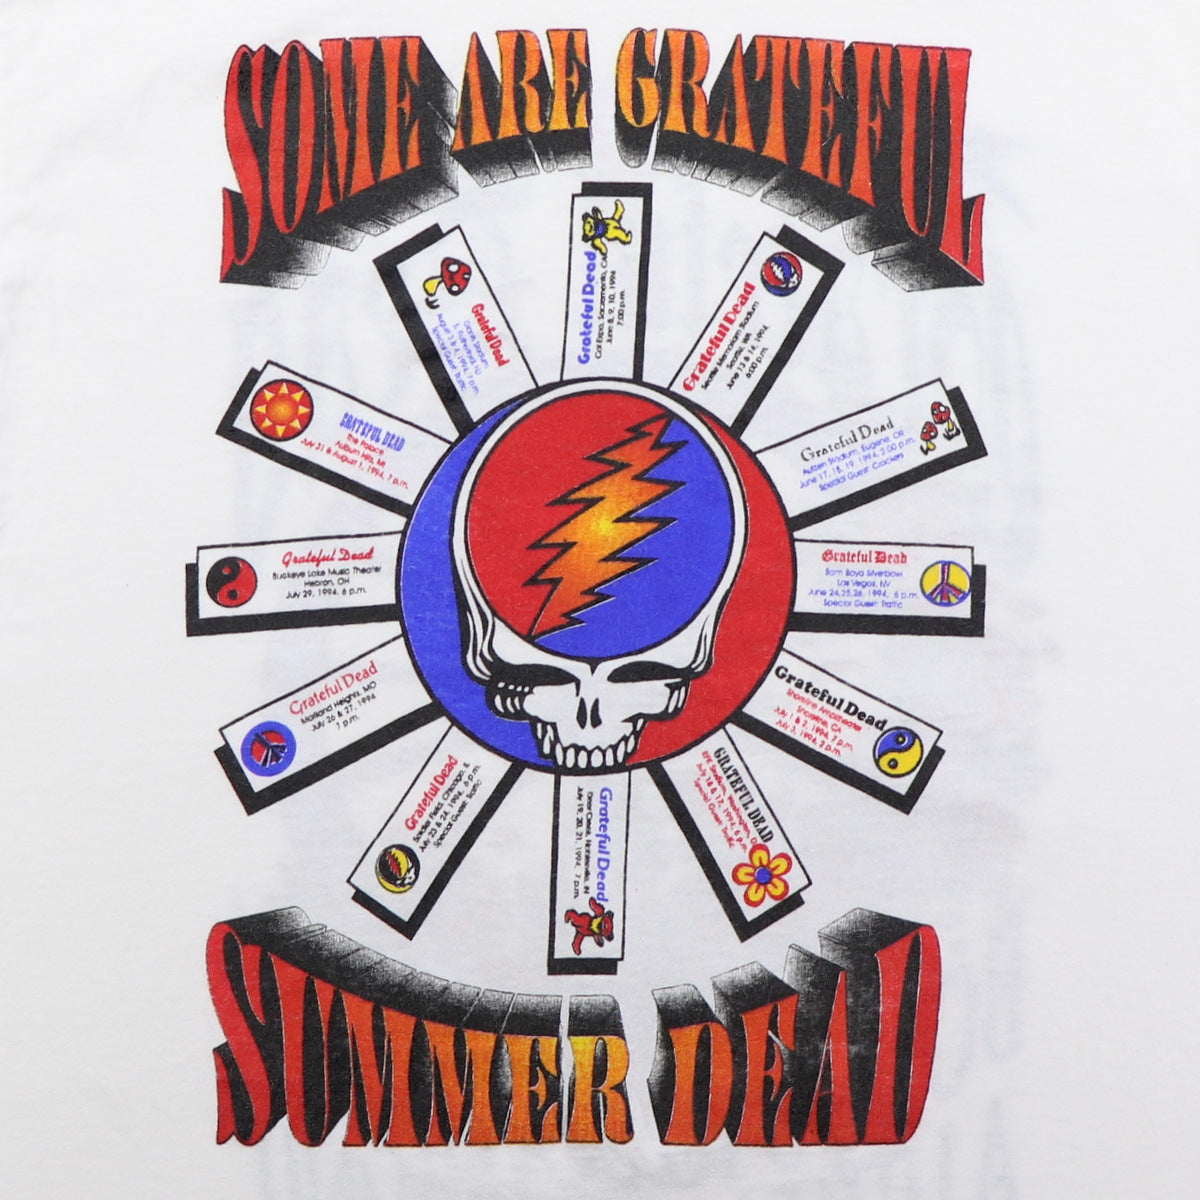 1994 Grateful Dead Some Are Grateful Summer Dead Tour Shirt